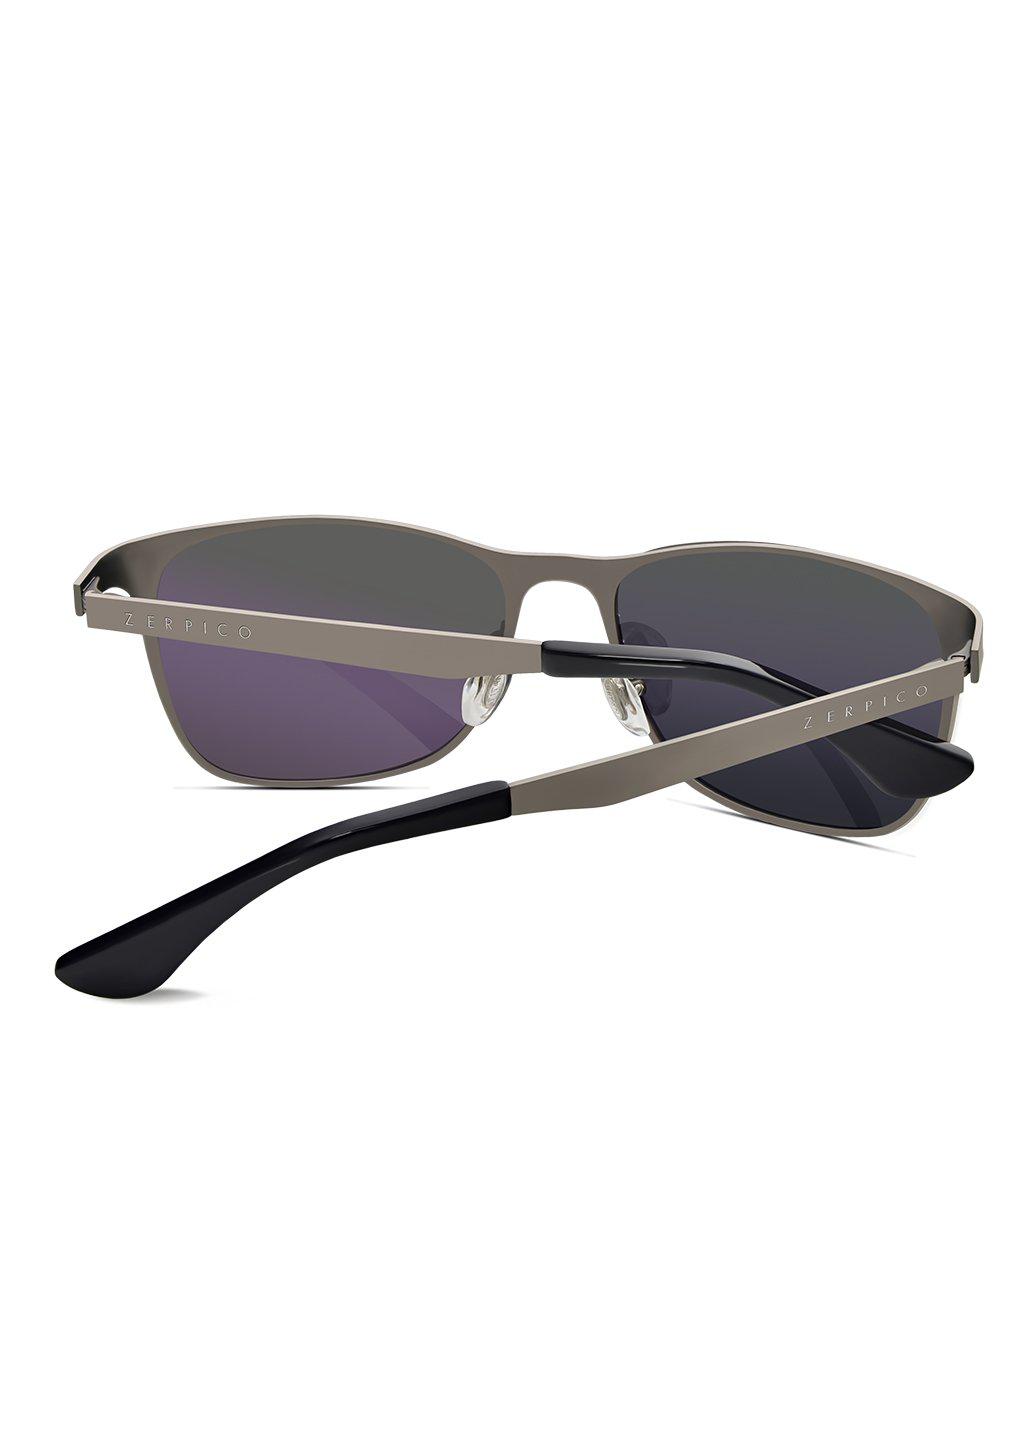 Leather Sunglasses Case Hard Personalized for Wayfarer -  Sweden